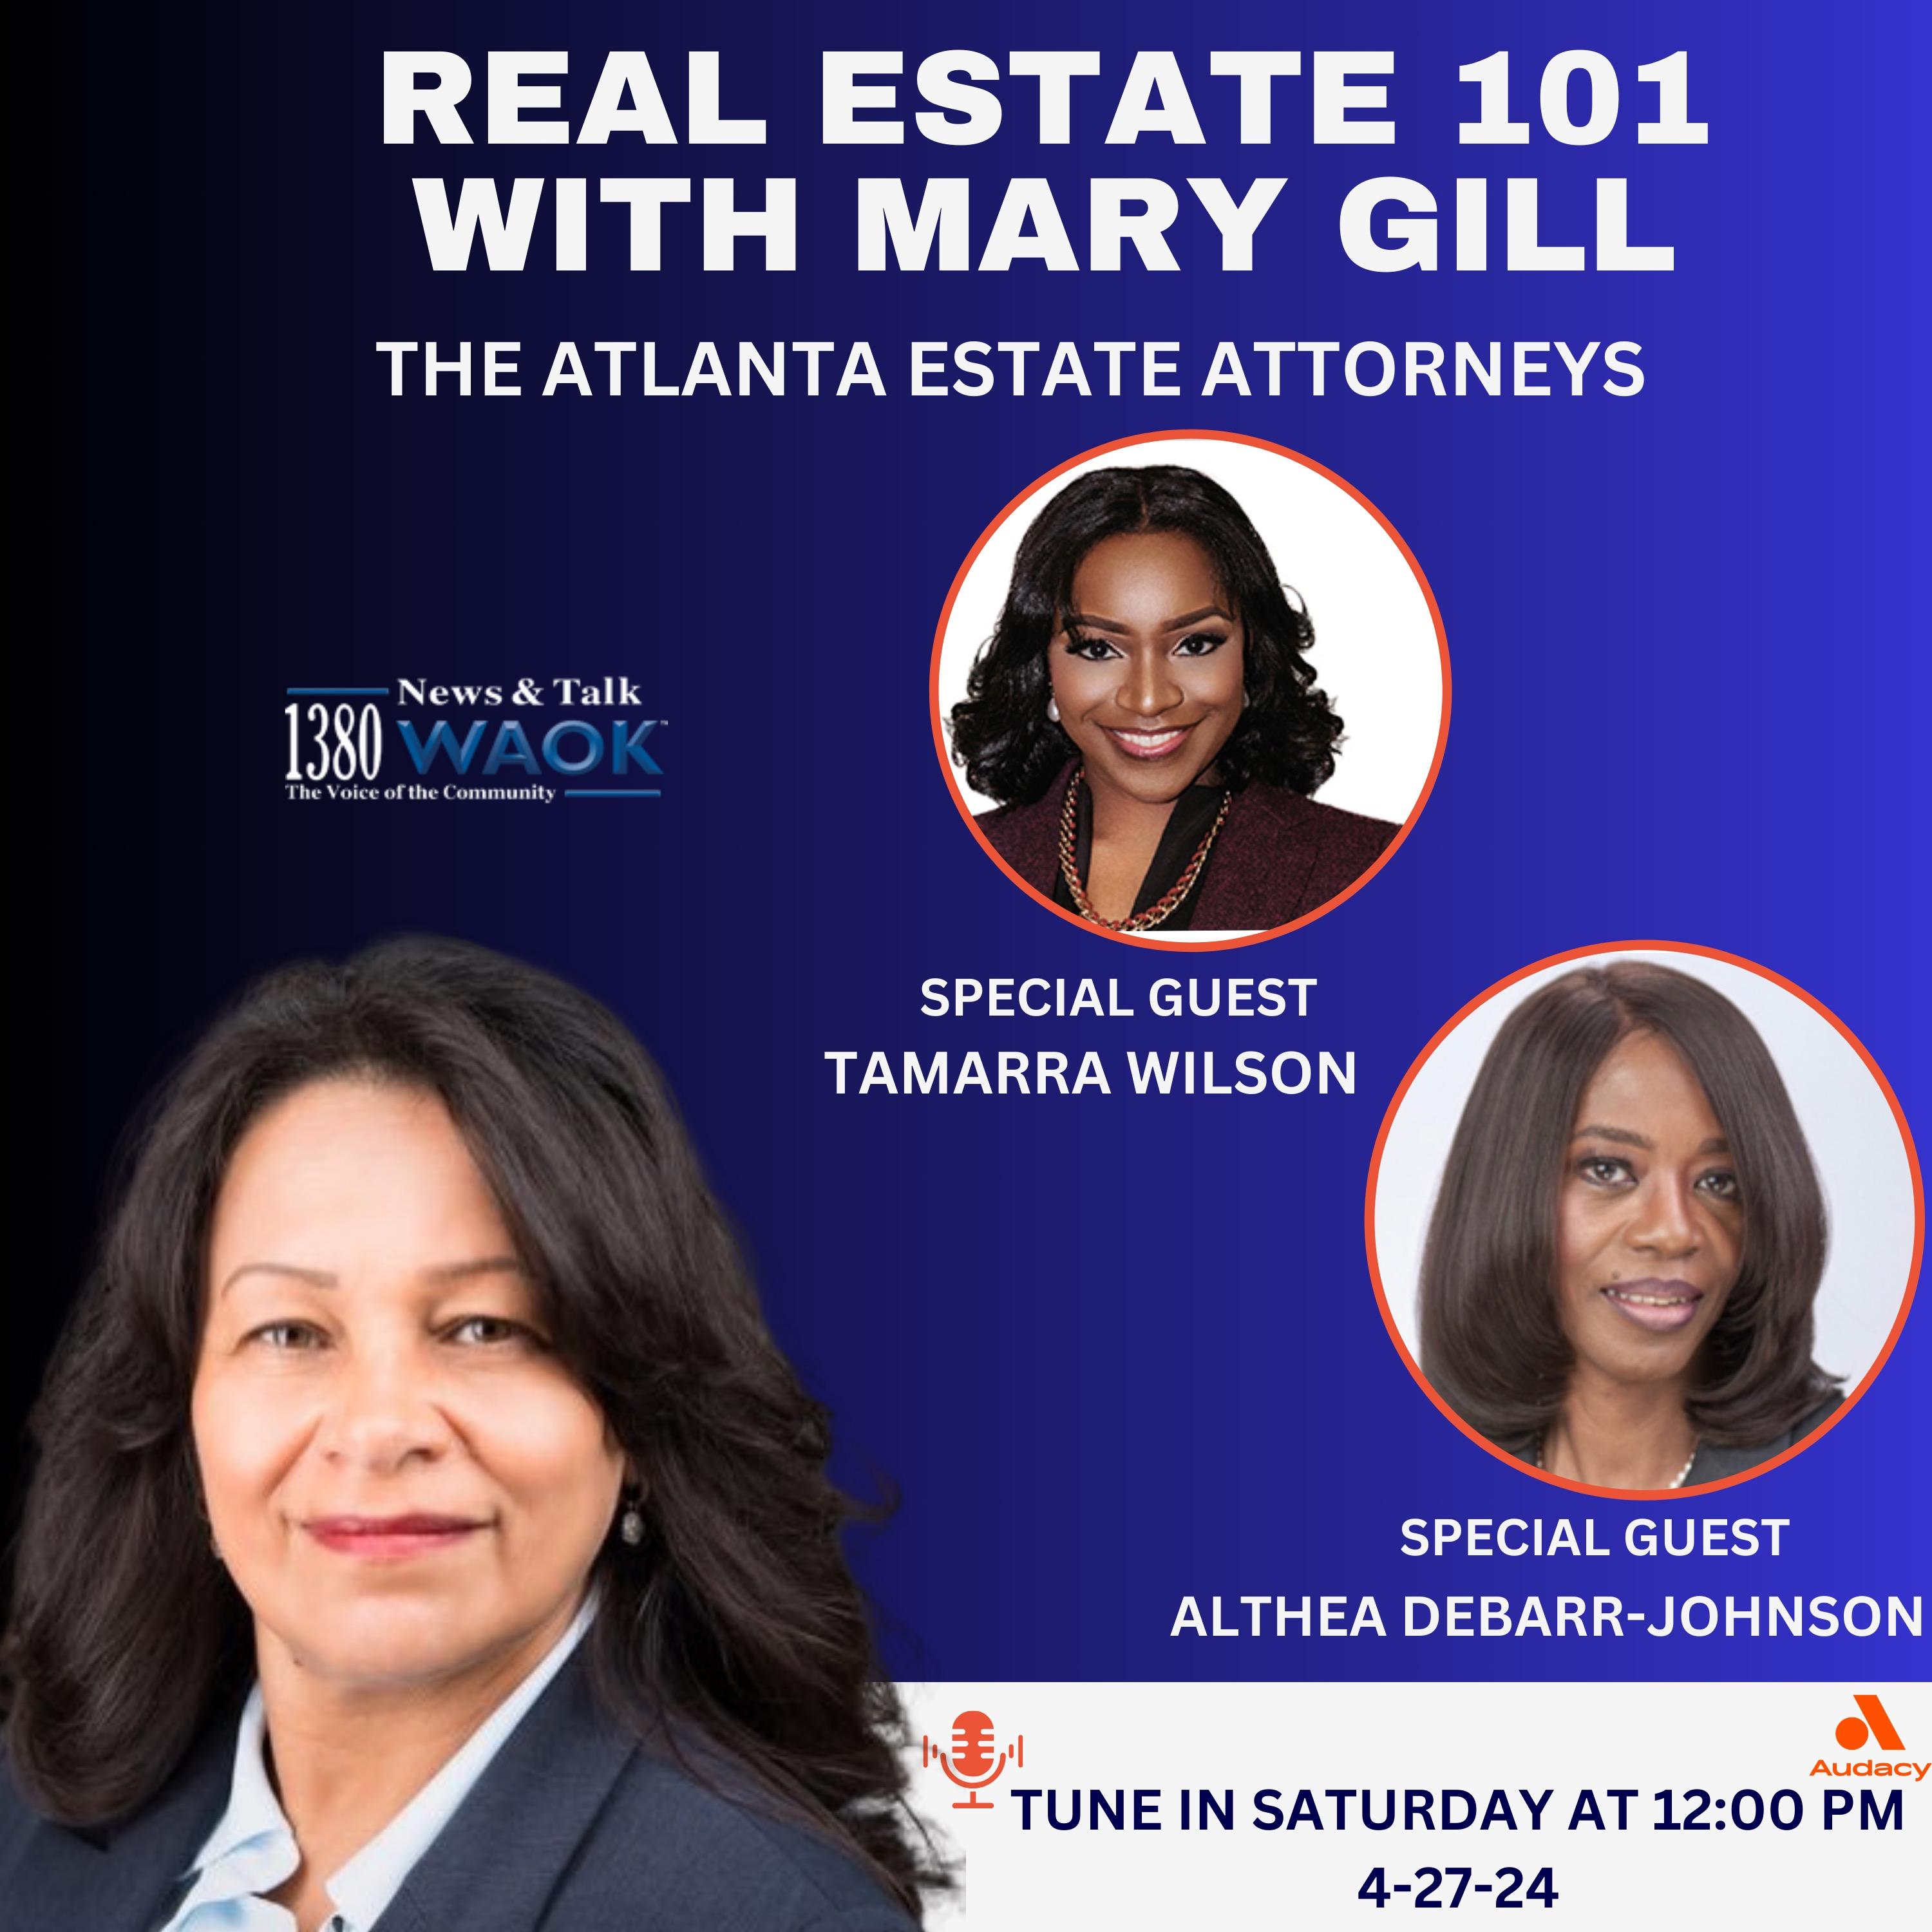 The Atlanta Estate Attorneys : Mary Gill speaks with Tamarra Wilson